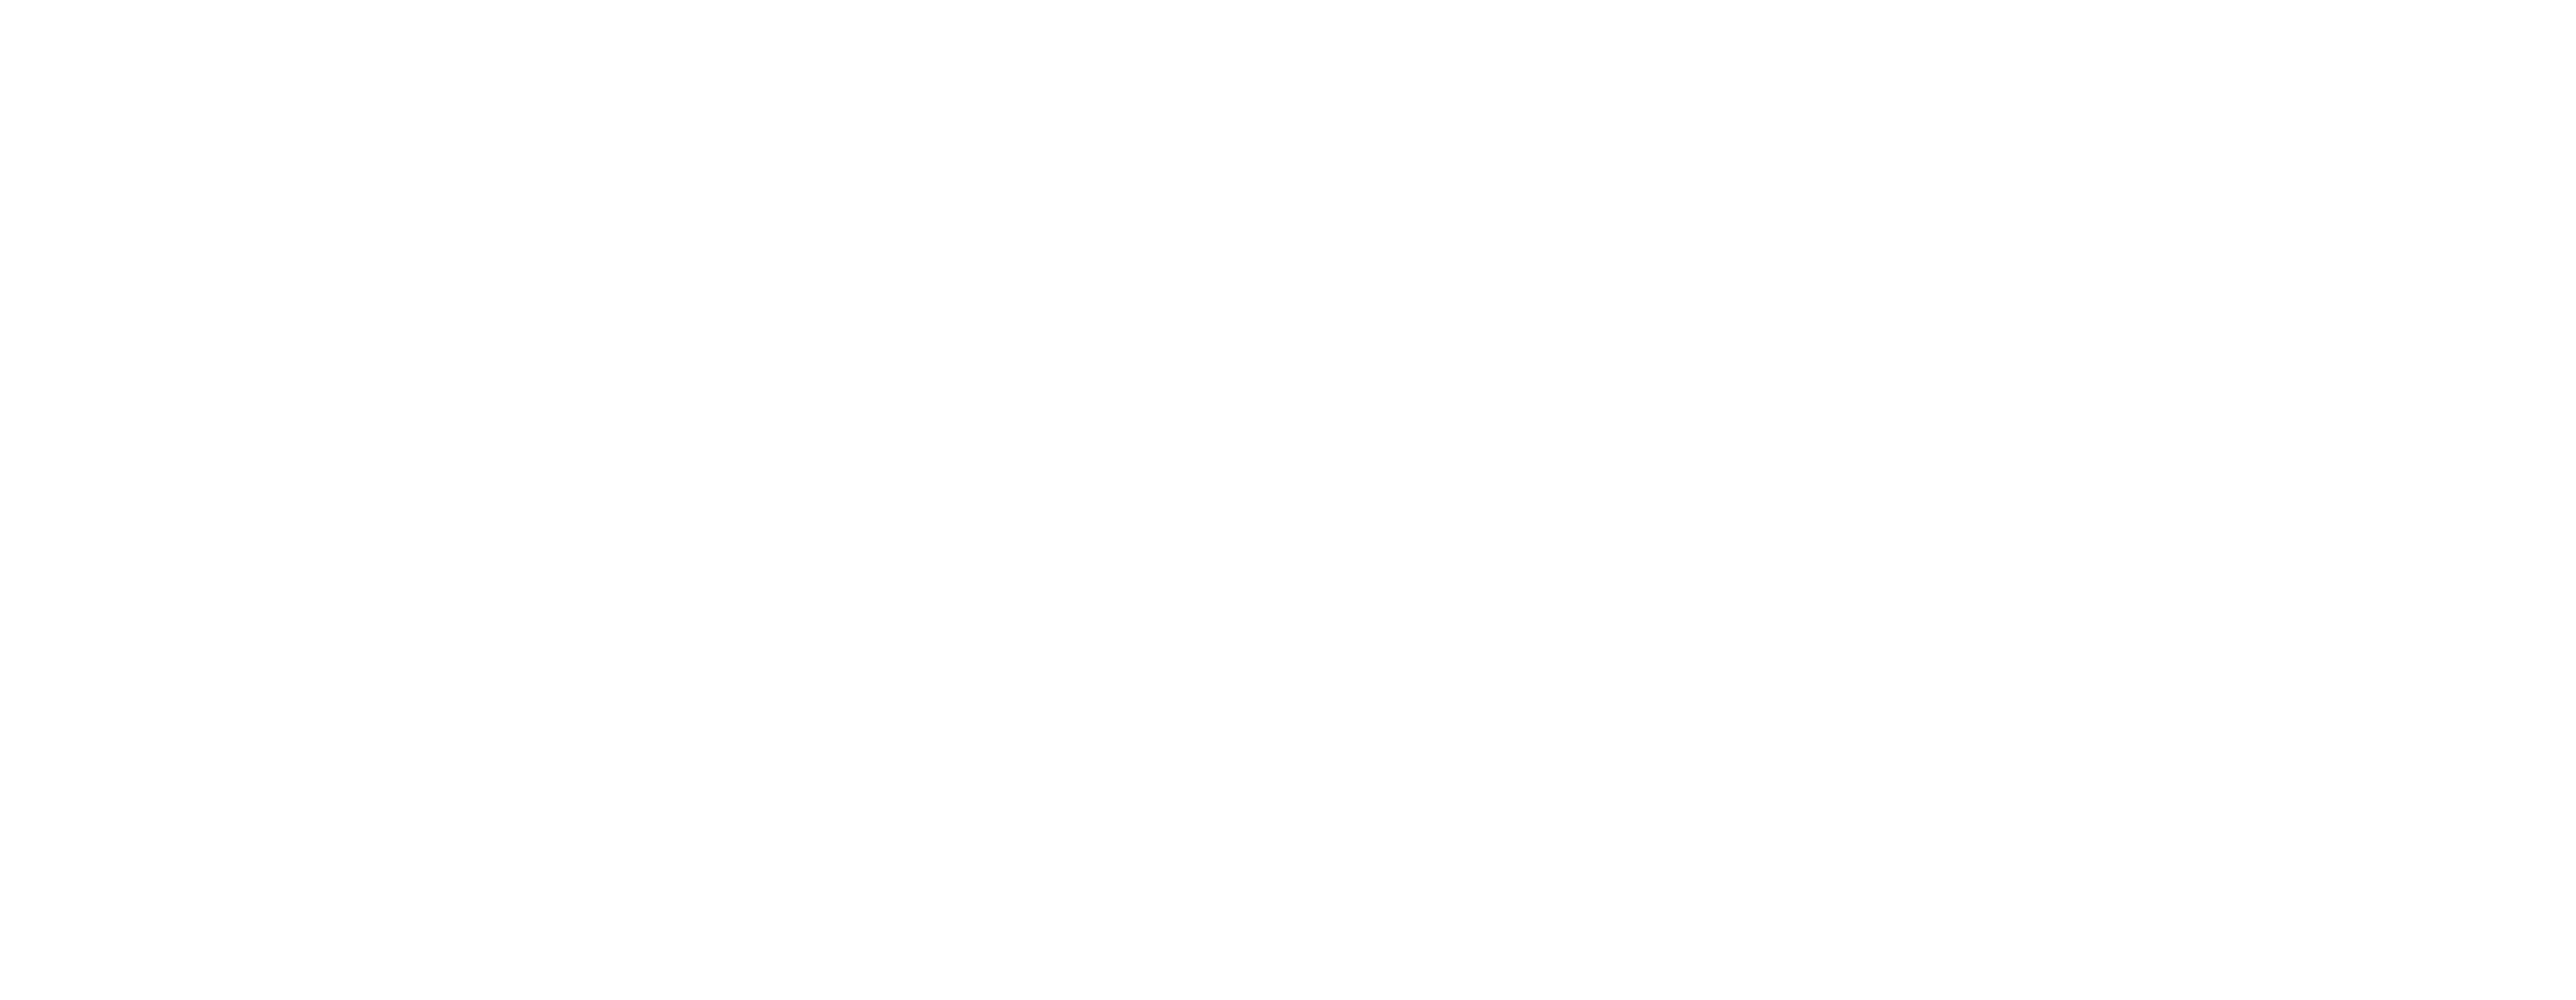 Stream episode Pow Wow Pitch Podcast E21 - Embrace your starting point with  Kahentawaks Tiewishaw by Pow Wow Pitch Podcast podcast